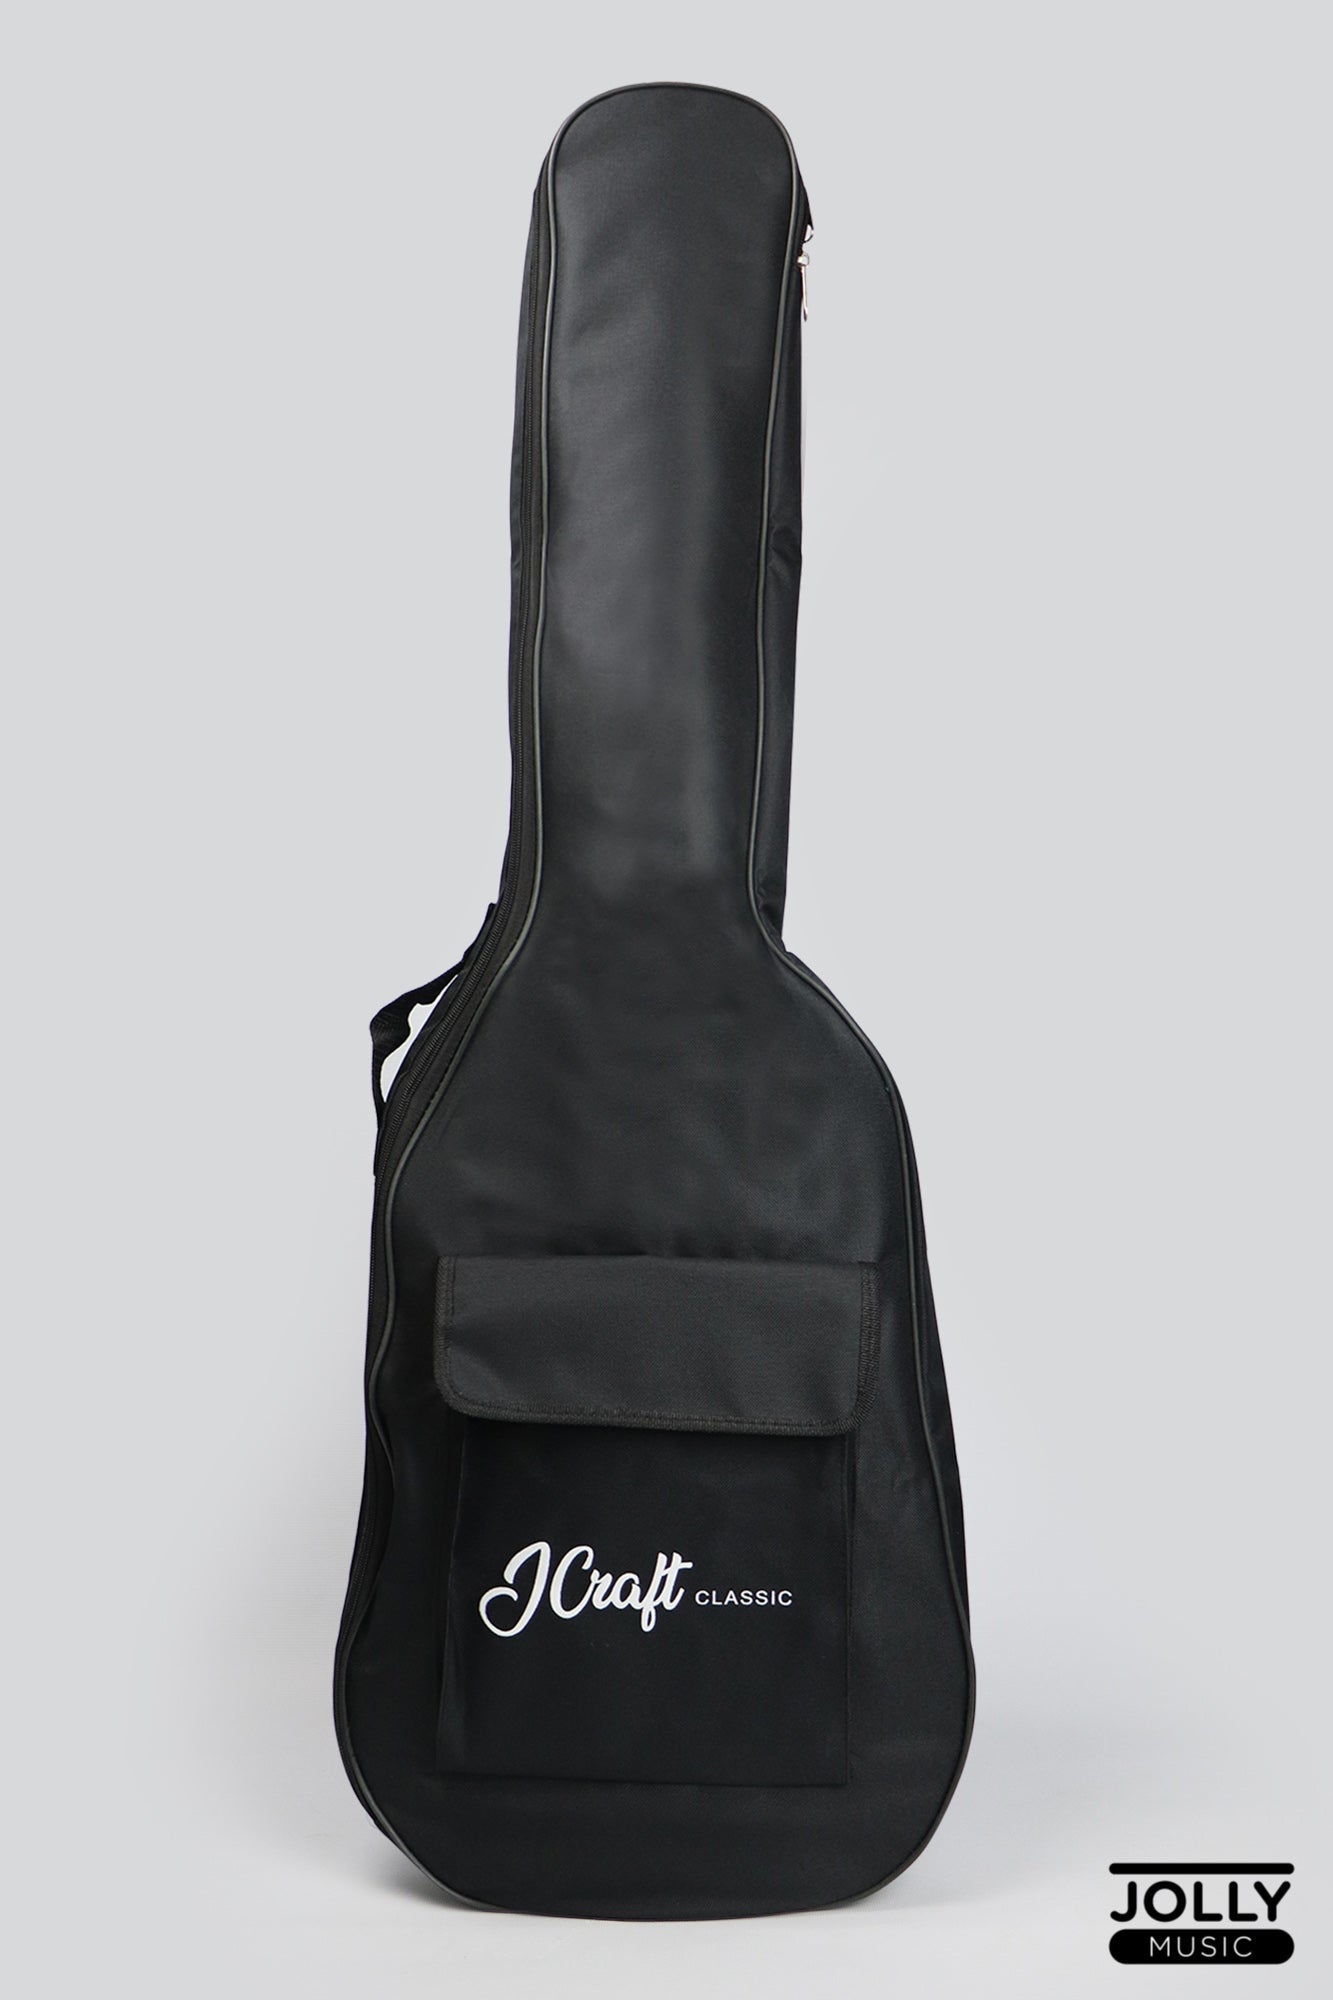 JCraft PB-1 4-String Electric Bass Guitar with Gigbag - Natural